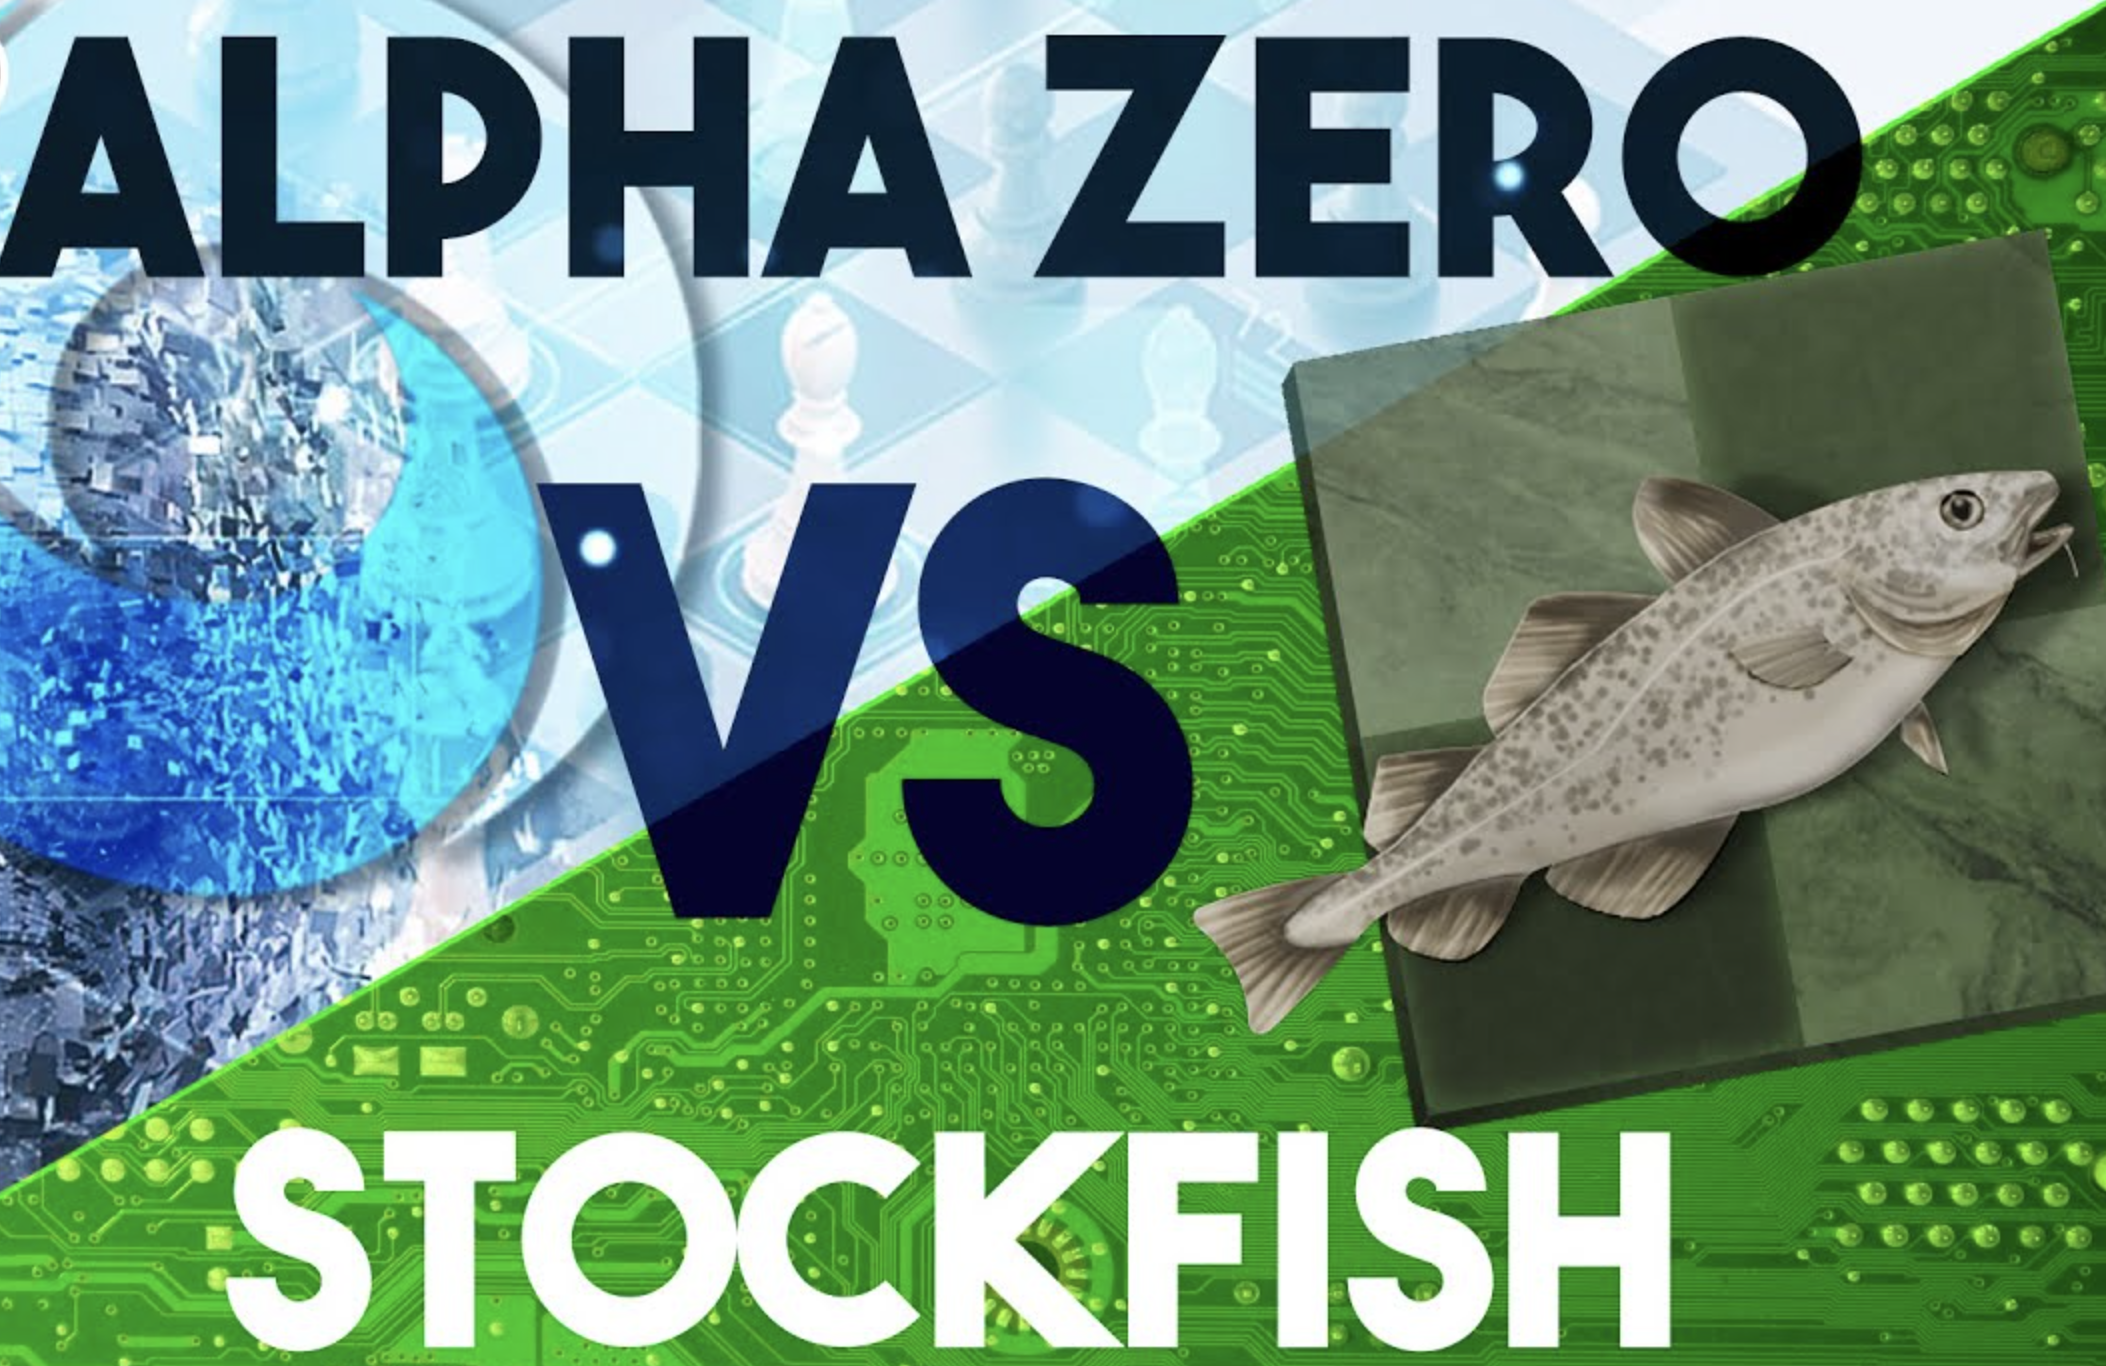 Best chess engine game !! Alphazero vs Stockfish